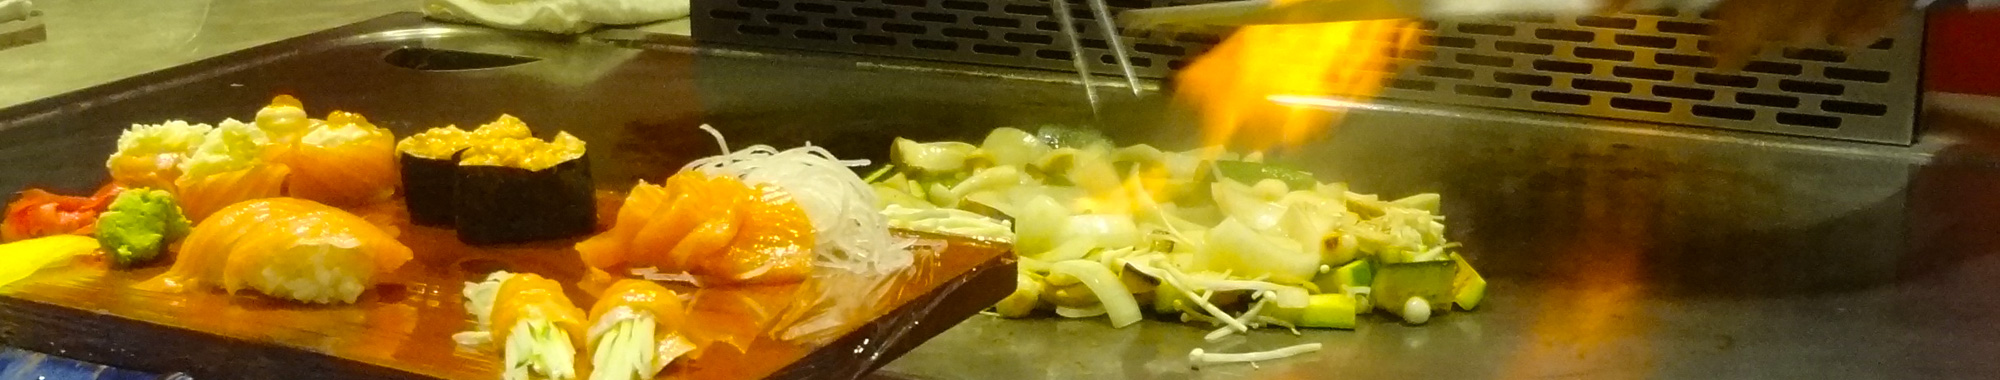 De Gouden Wok - Teppanyaki wereld keuken